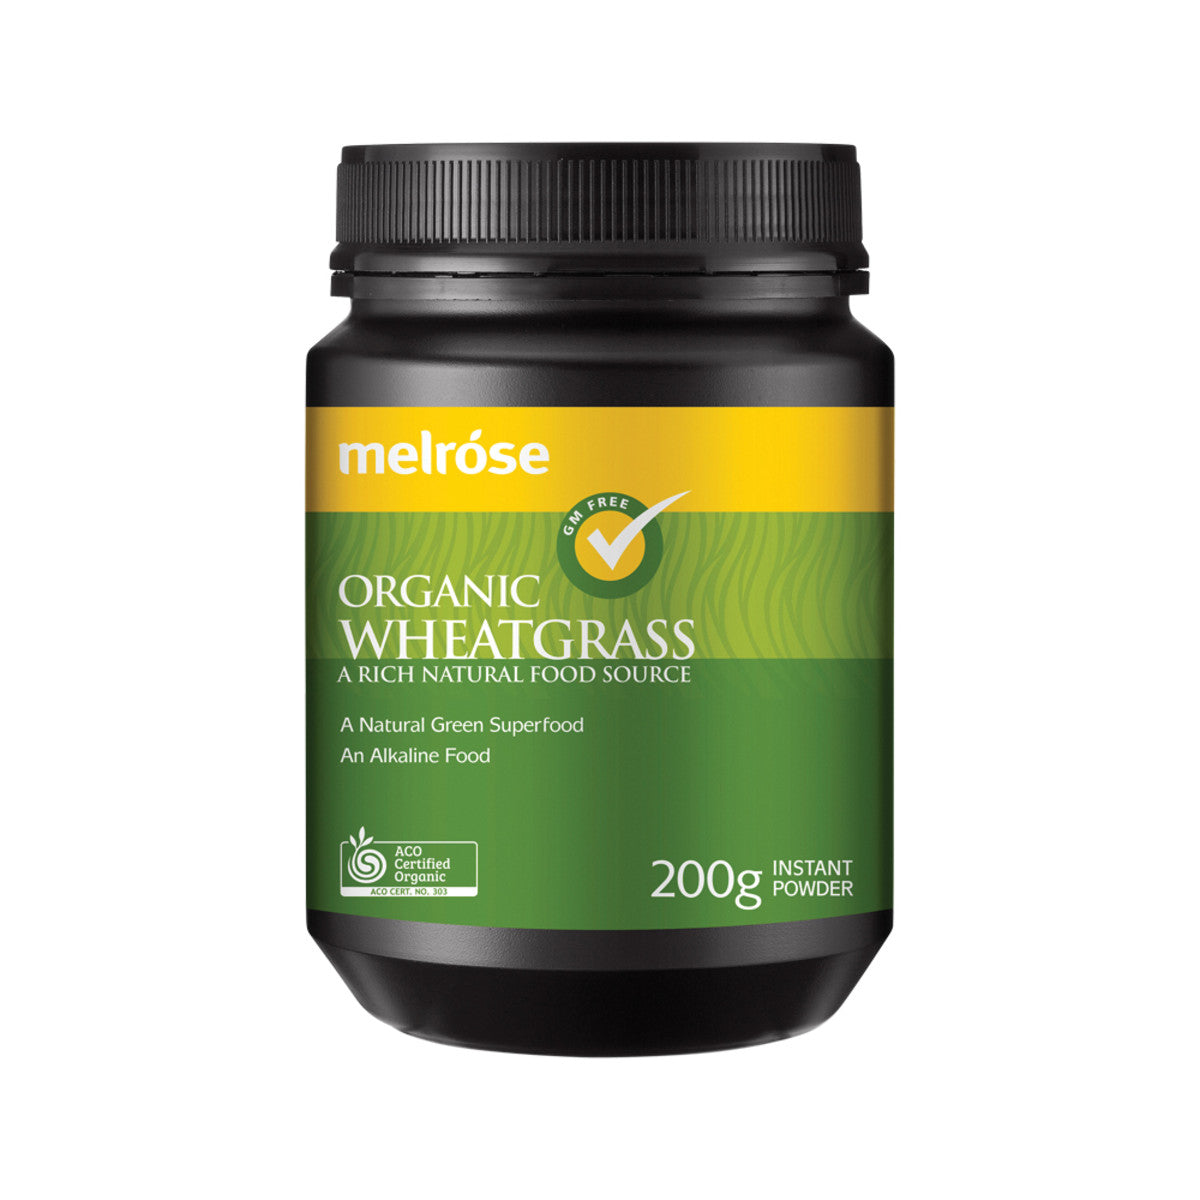 Melrose Organic Wheatgrass Powder 200g Instant Powder-The Living Co.